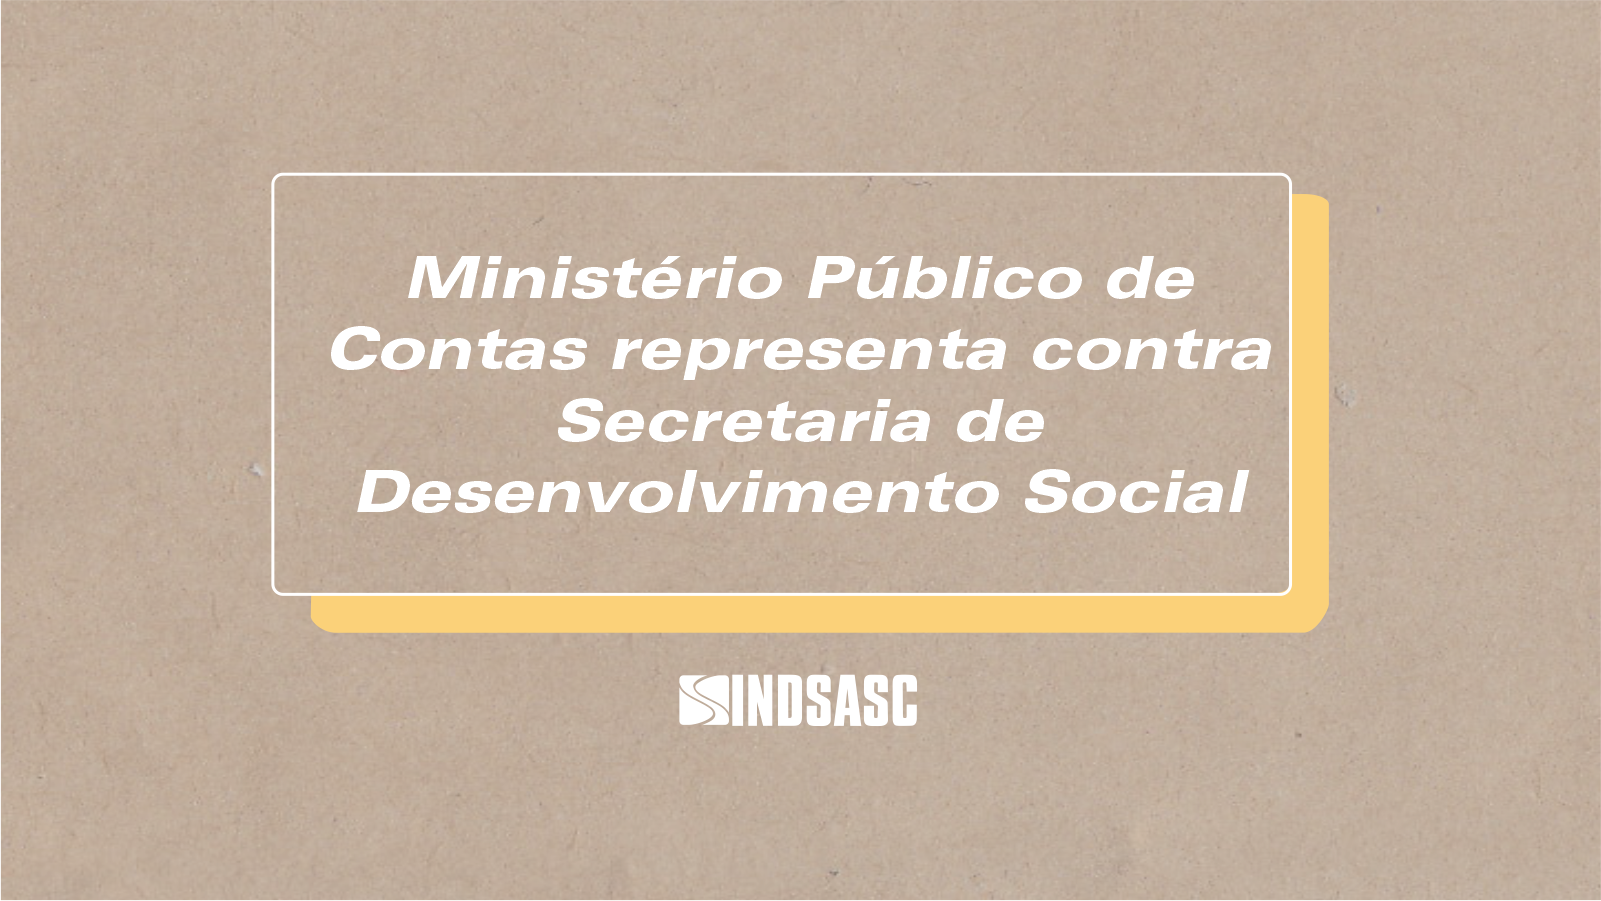 Ministério Público de contas representa contra Secretaria de Desenvolvimento Social